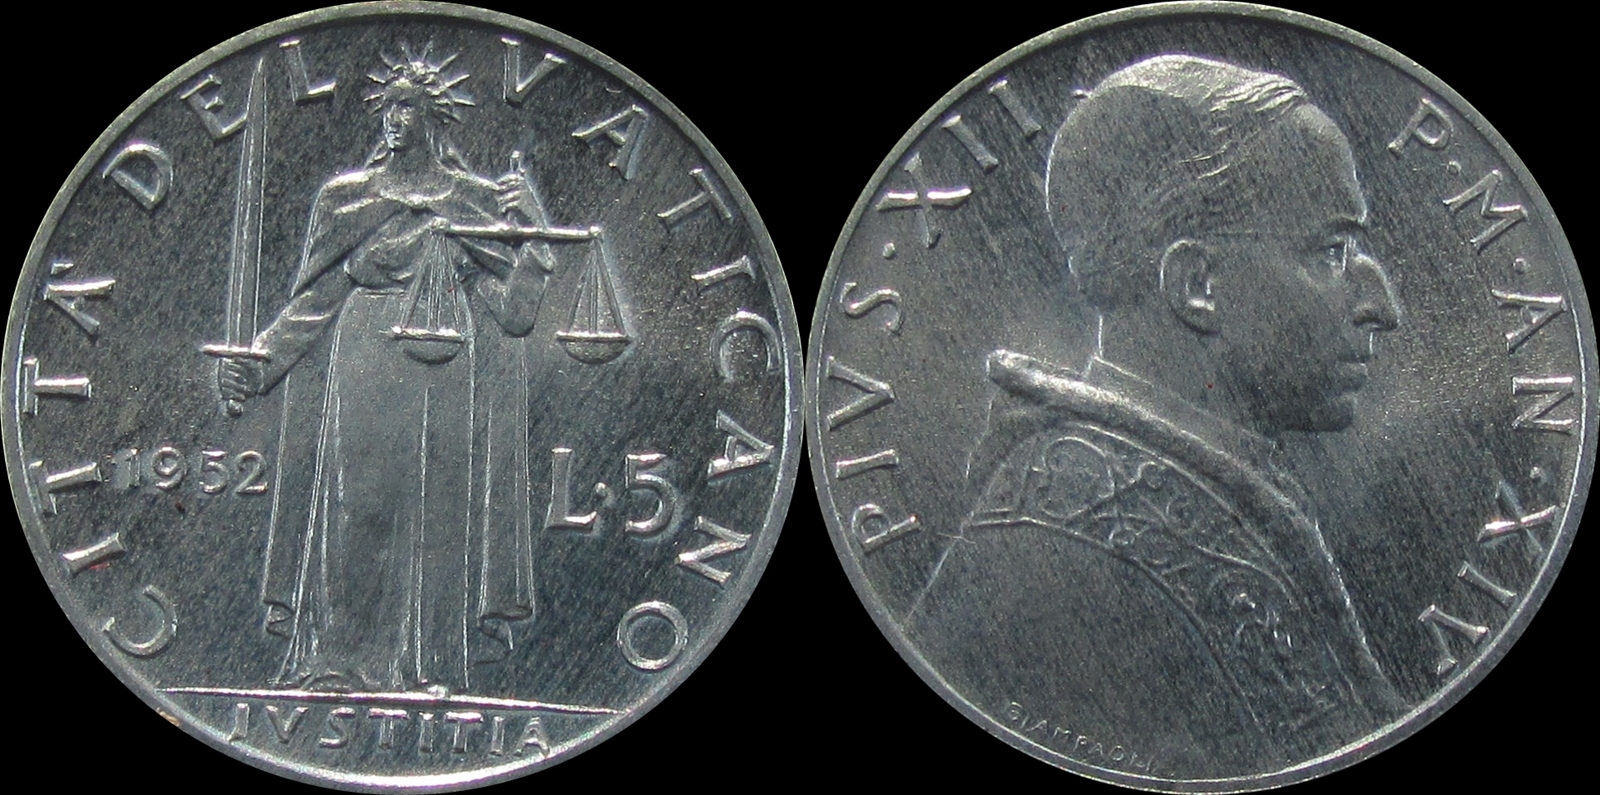 Vatican City 1952 5 Lira.jpg